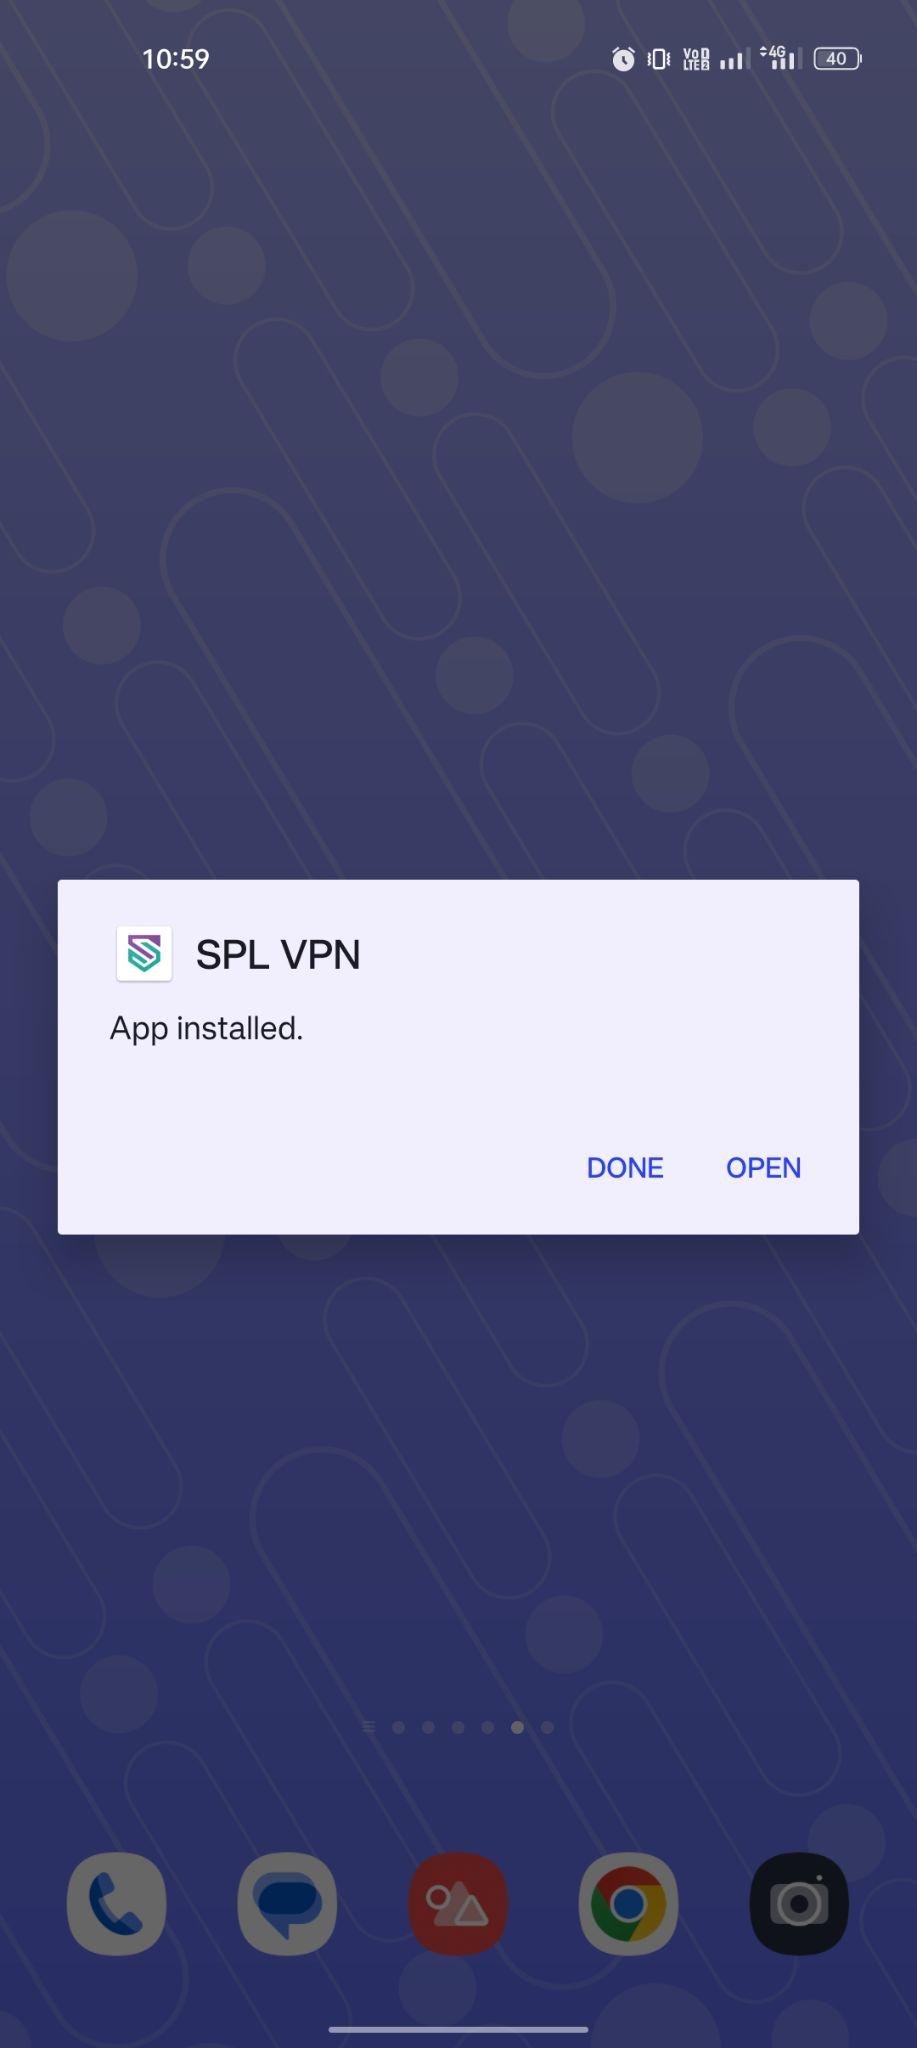 SPL VPN apk installed